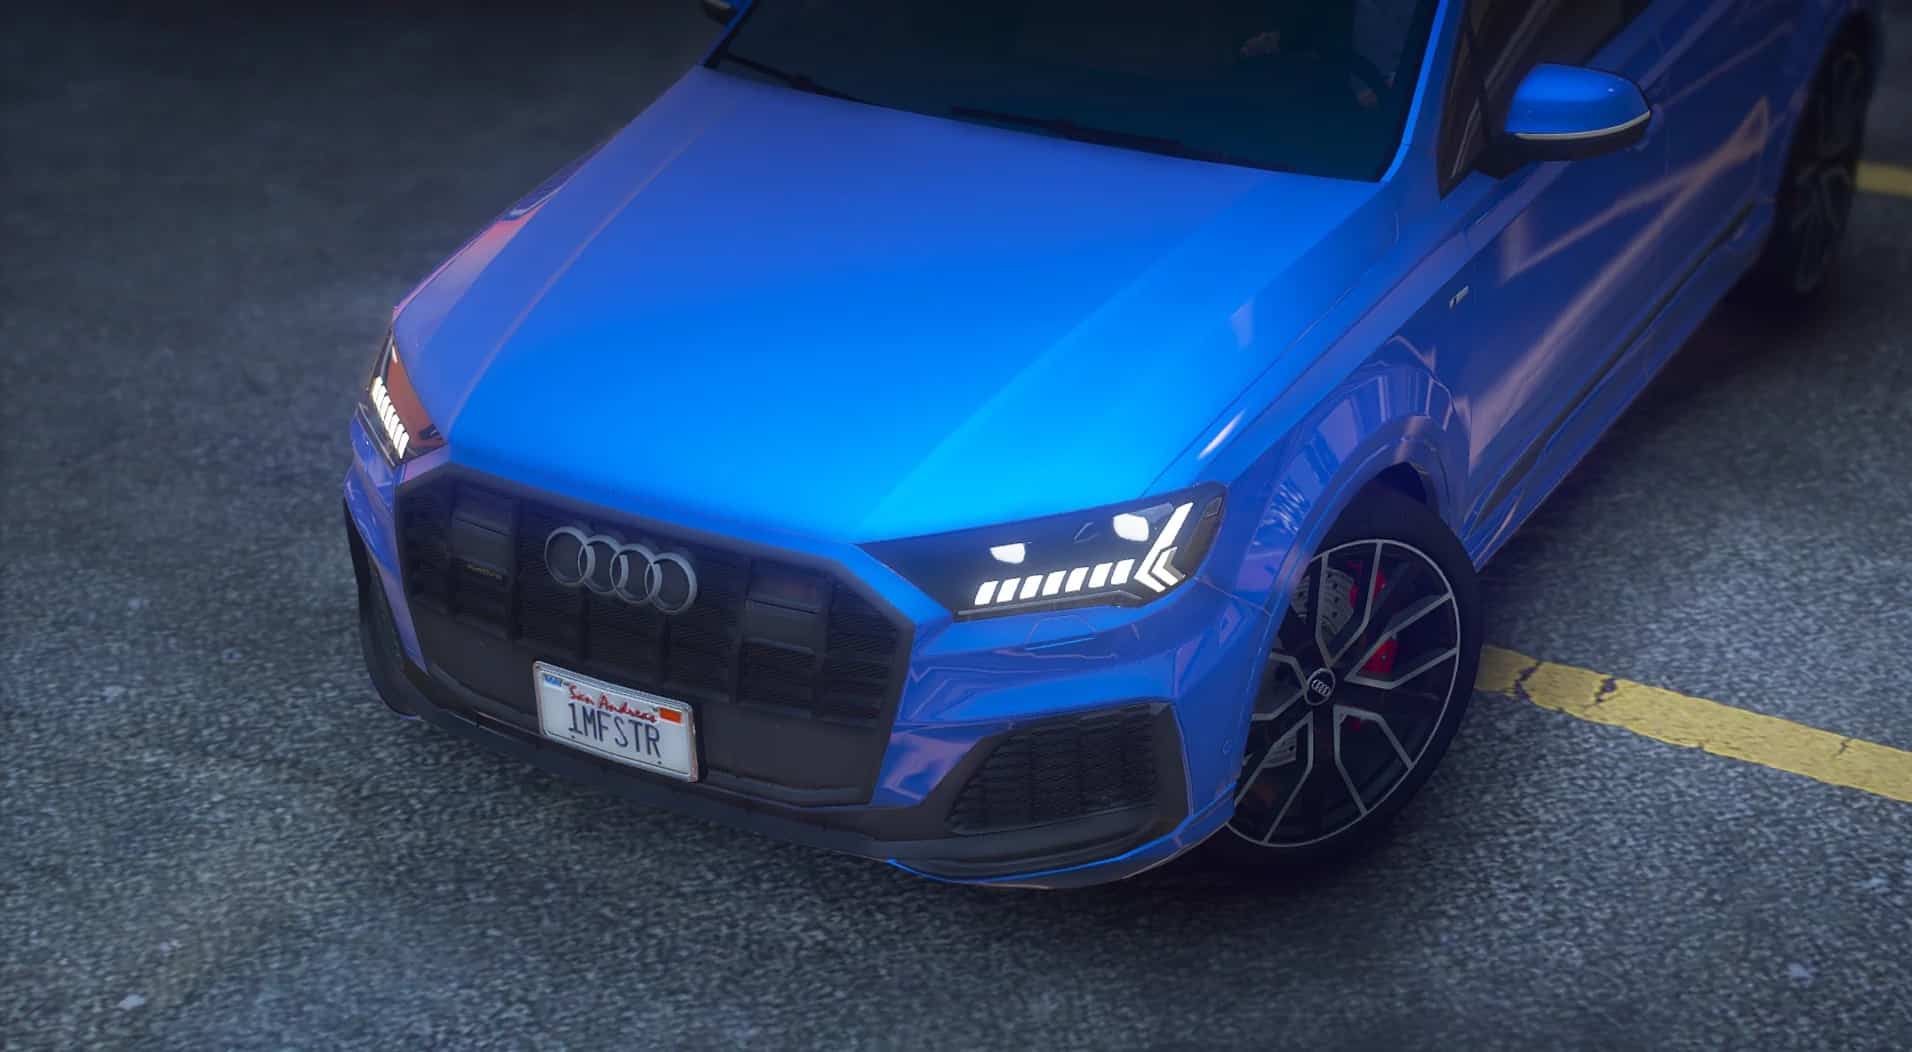 Audi Q7 2020 [Add-On | Extras] 1.2 - GTA 5 Mod | Grand Theft Auto 5 Mod